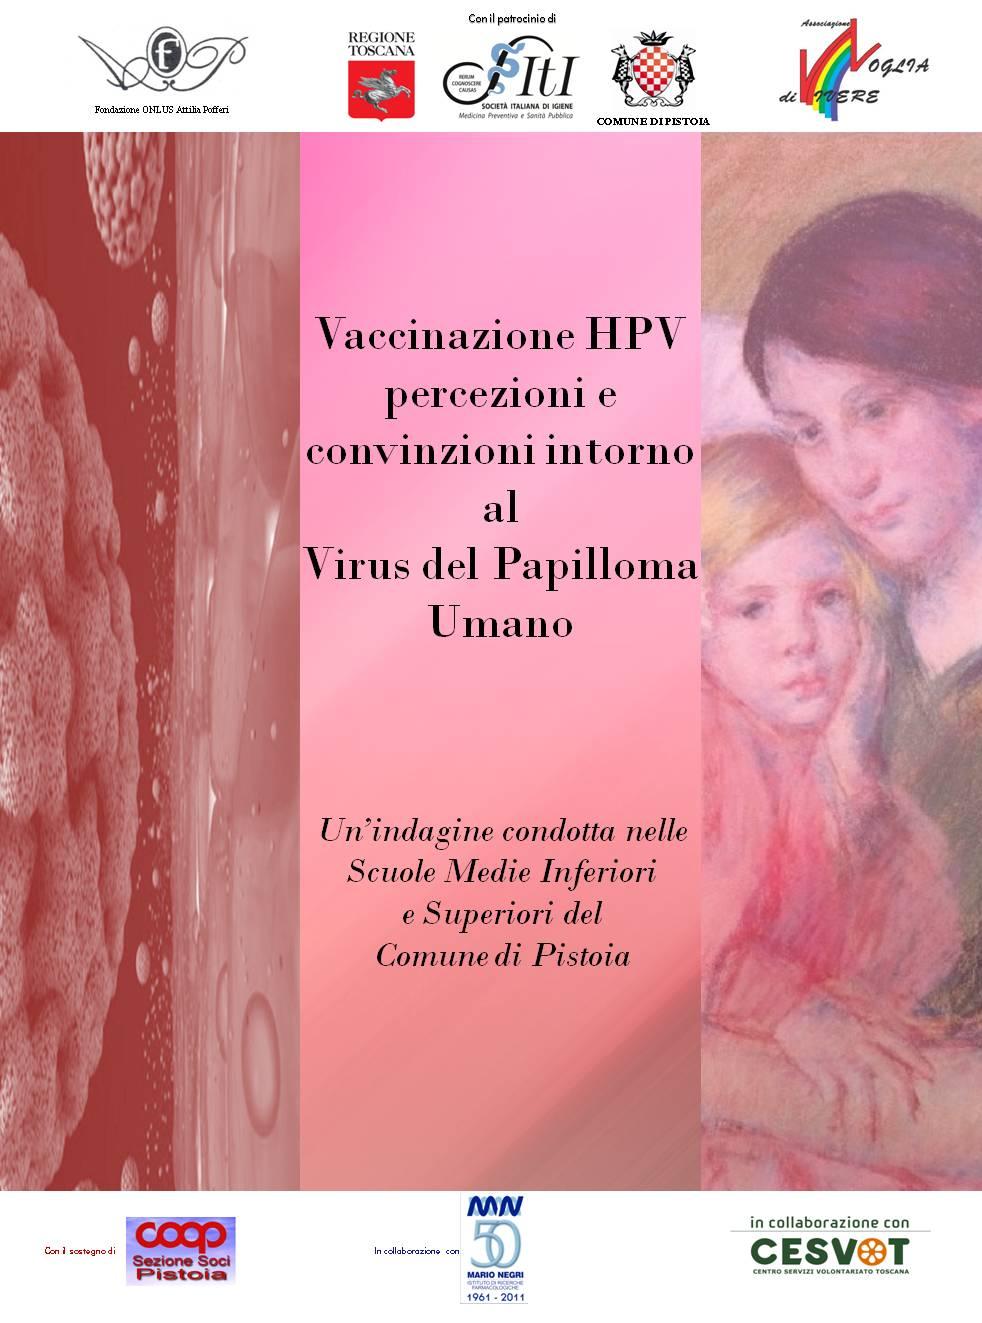 HPV: UN INDAGINE